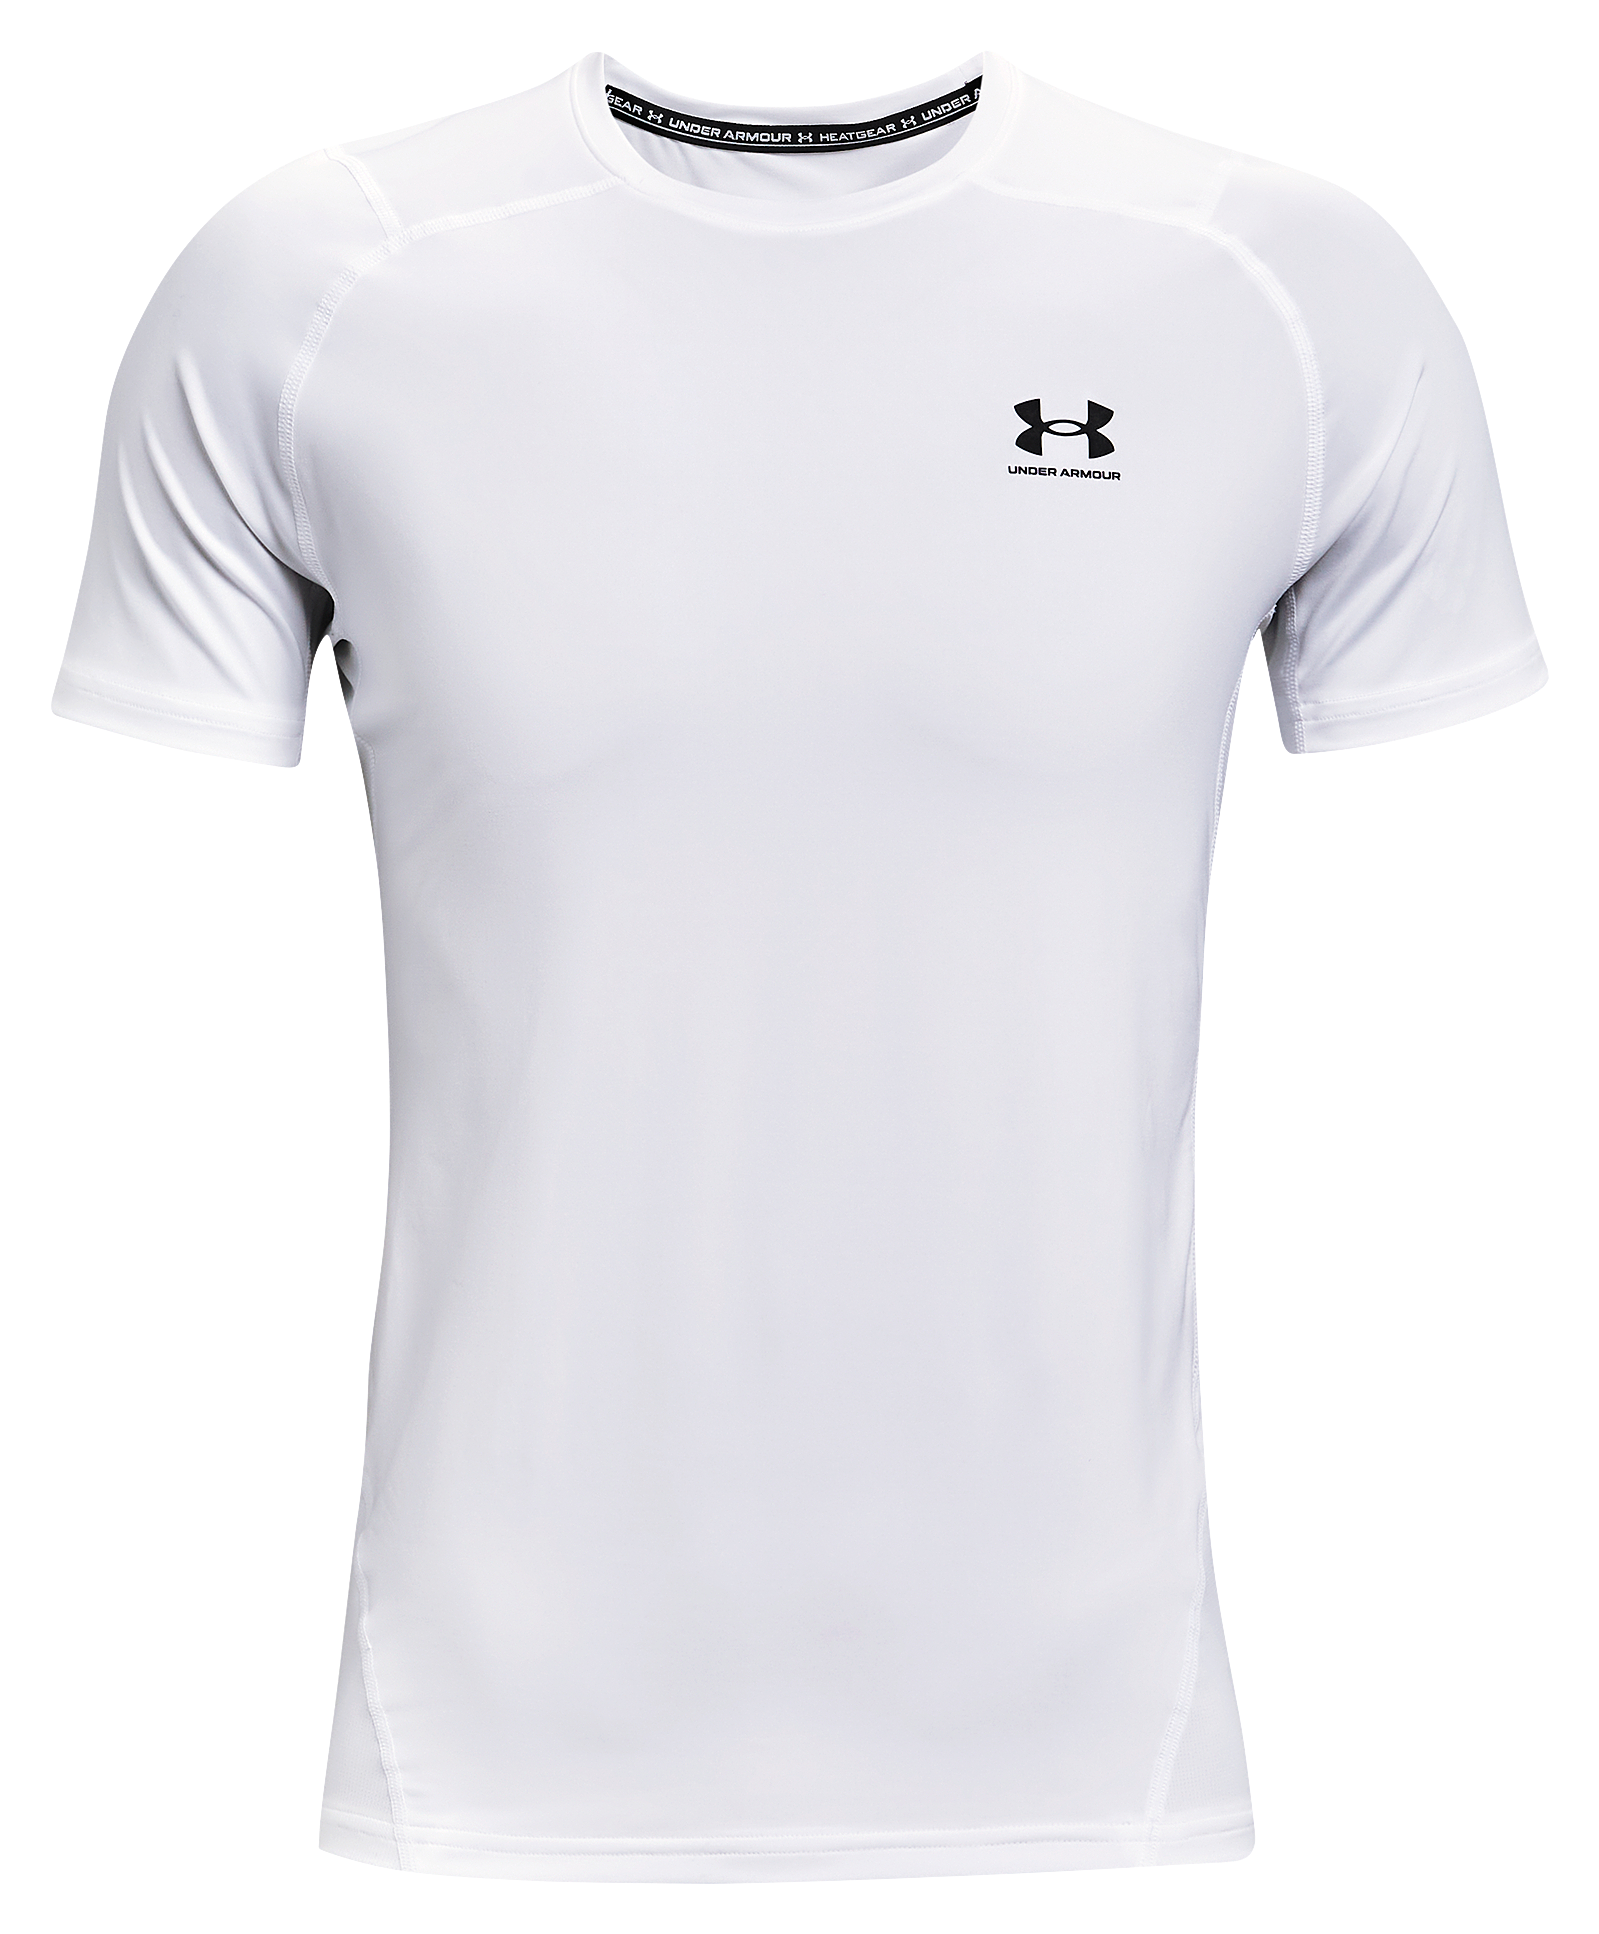 Under Armour HeatGear Fitted Short-Sleeve T-Shirt for Men - White - LT